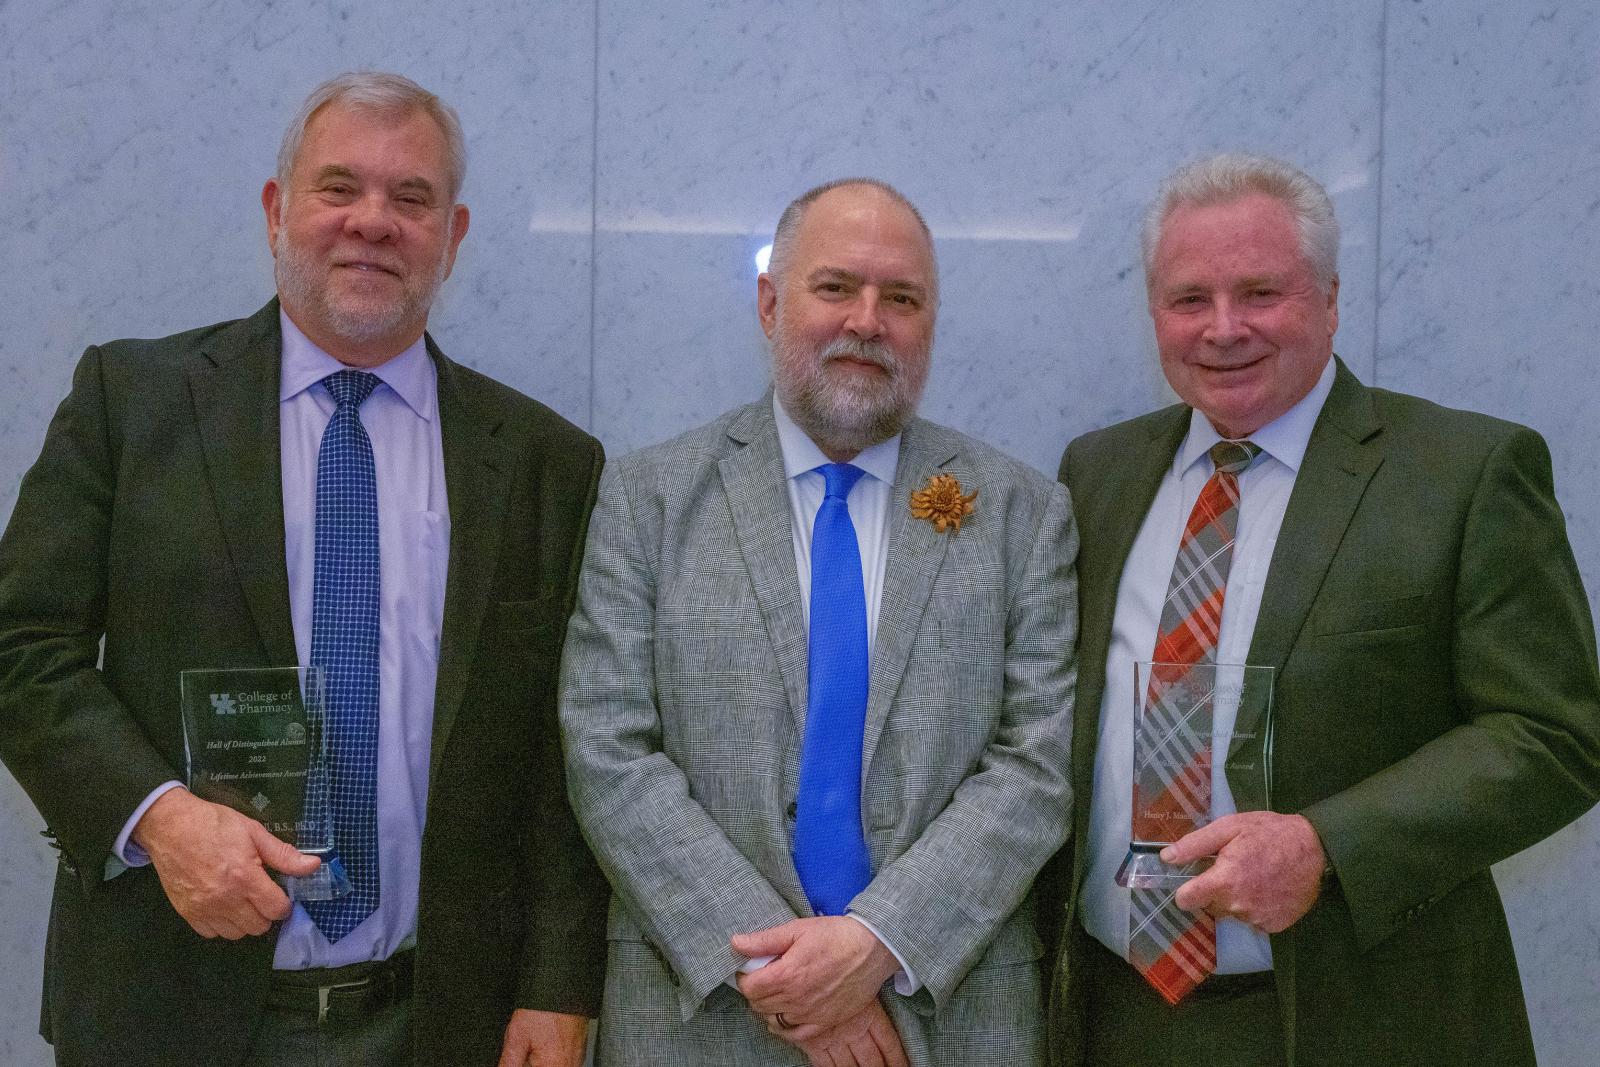 Dean Henry Mann receiving the UK College of Pharmacy's Lifetime Achievement Award